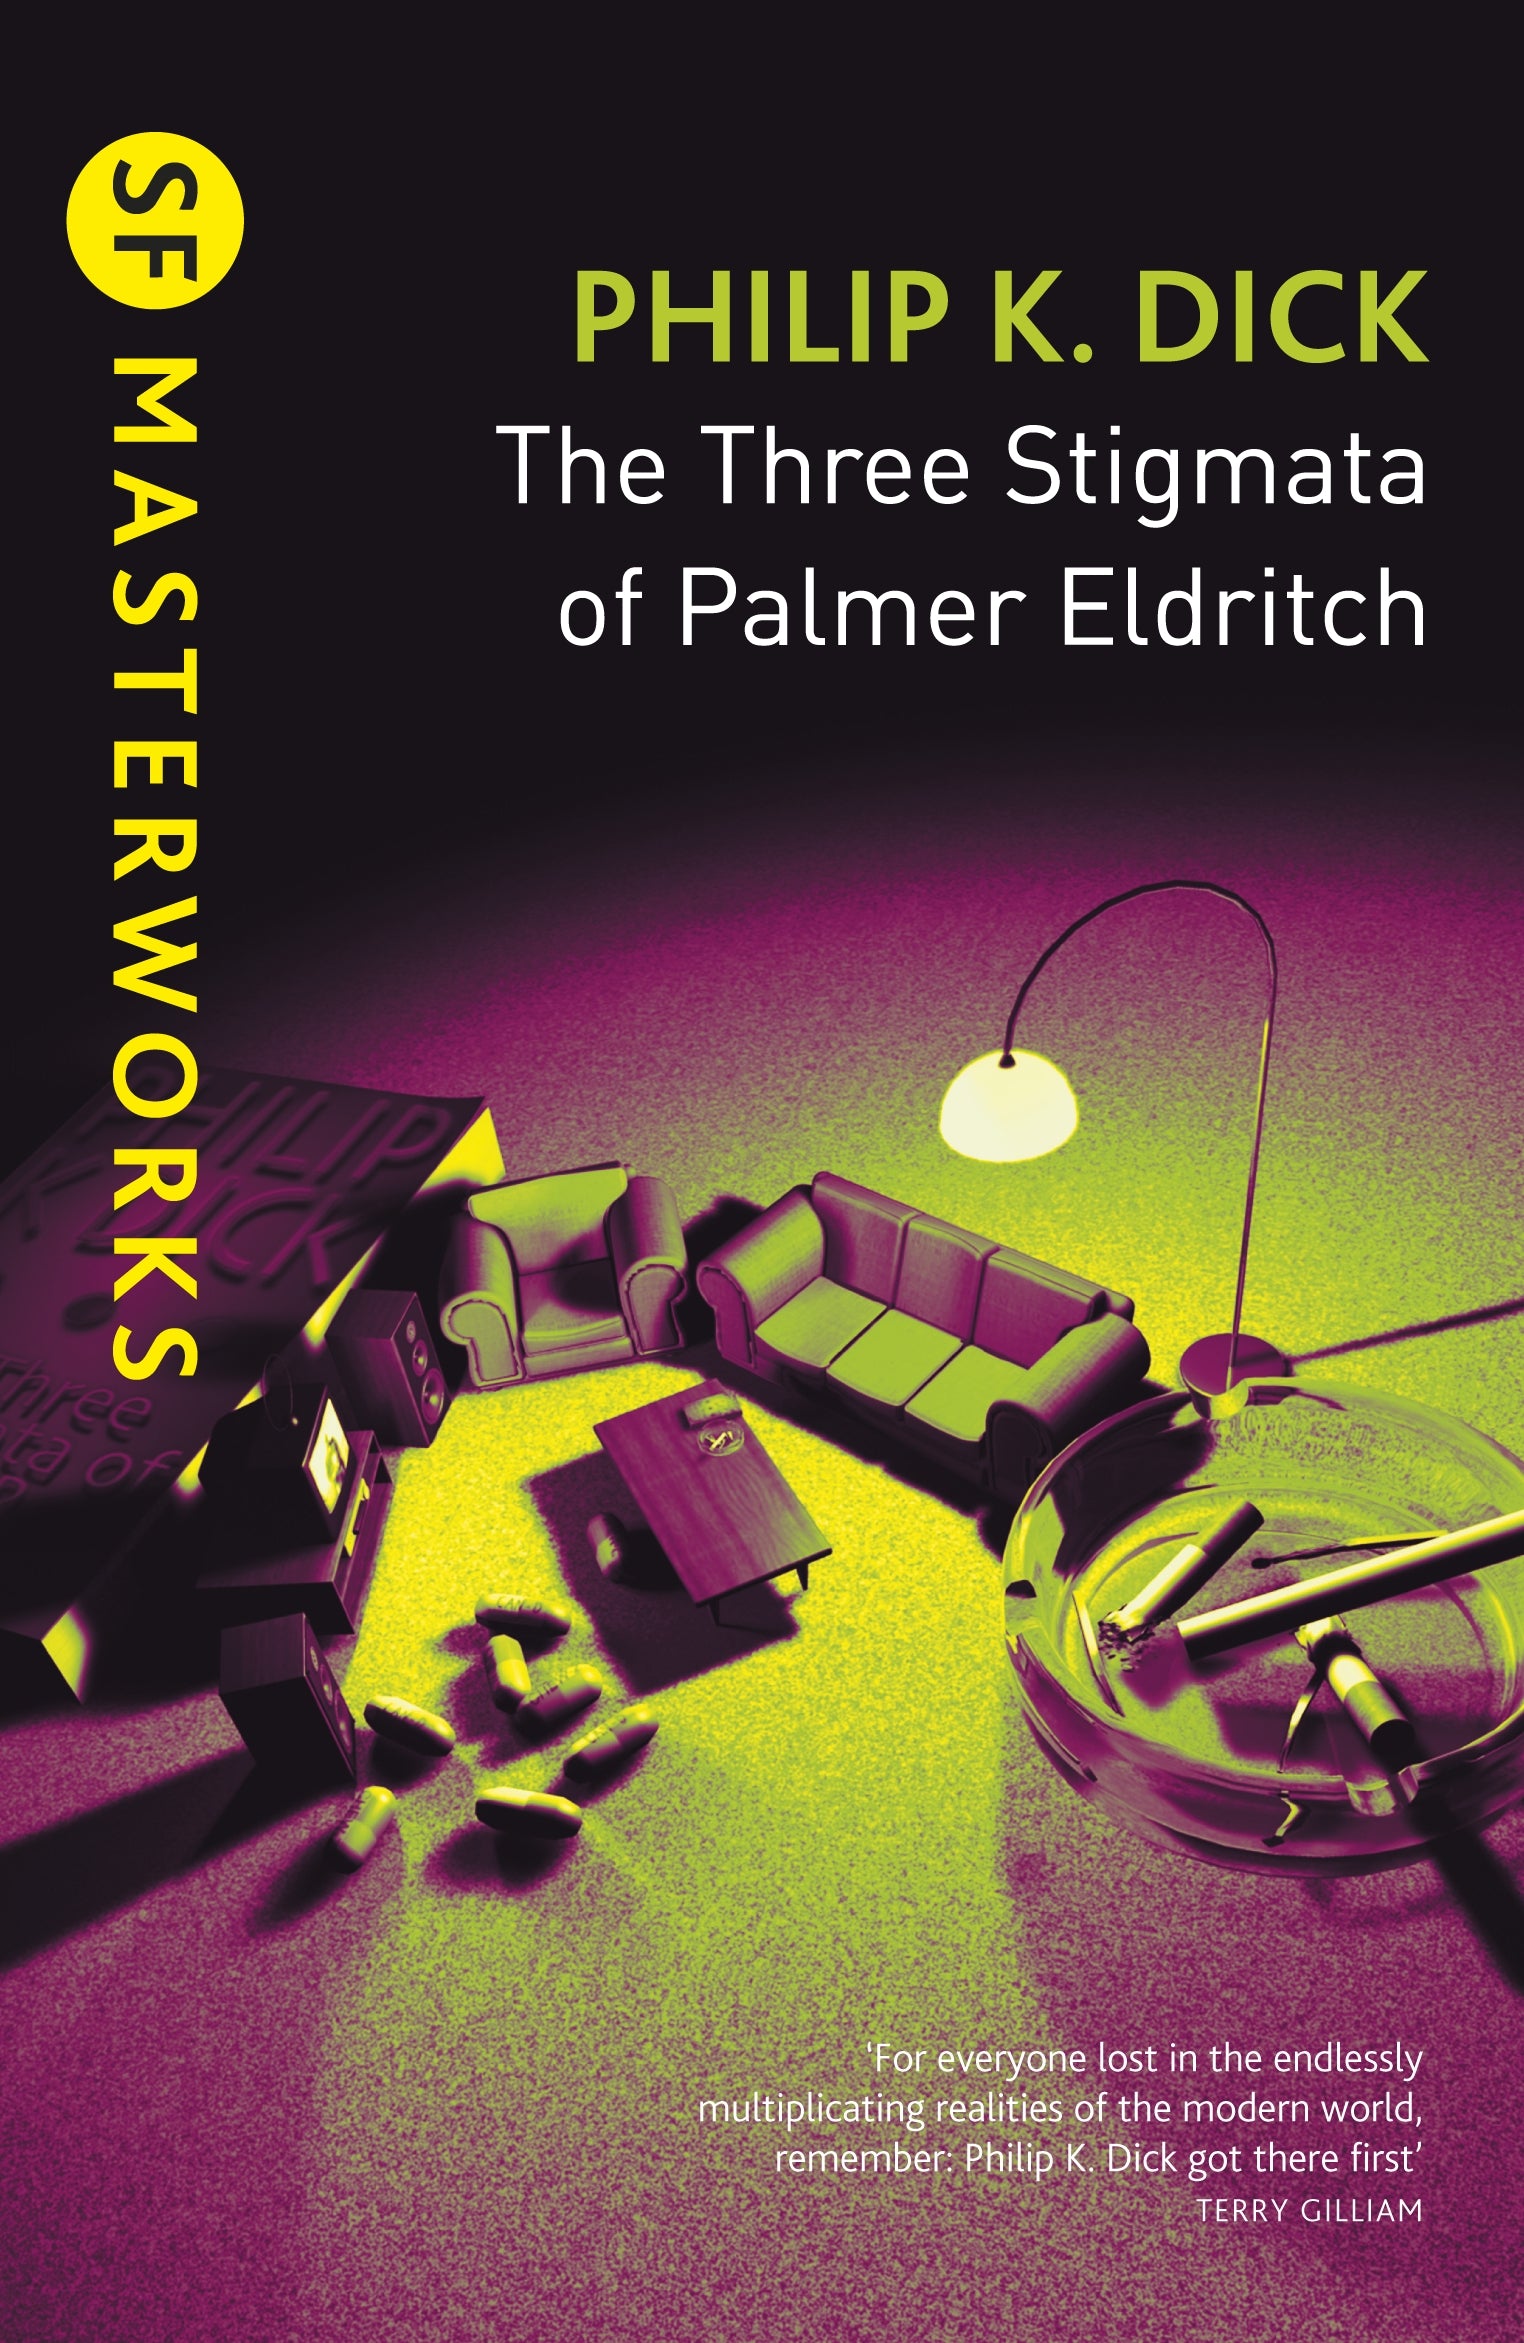 The Three Stigmata of Palmer Eldritch by Philip K Dick